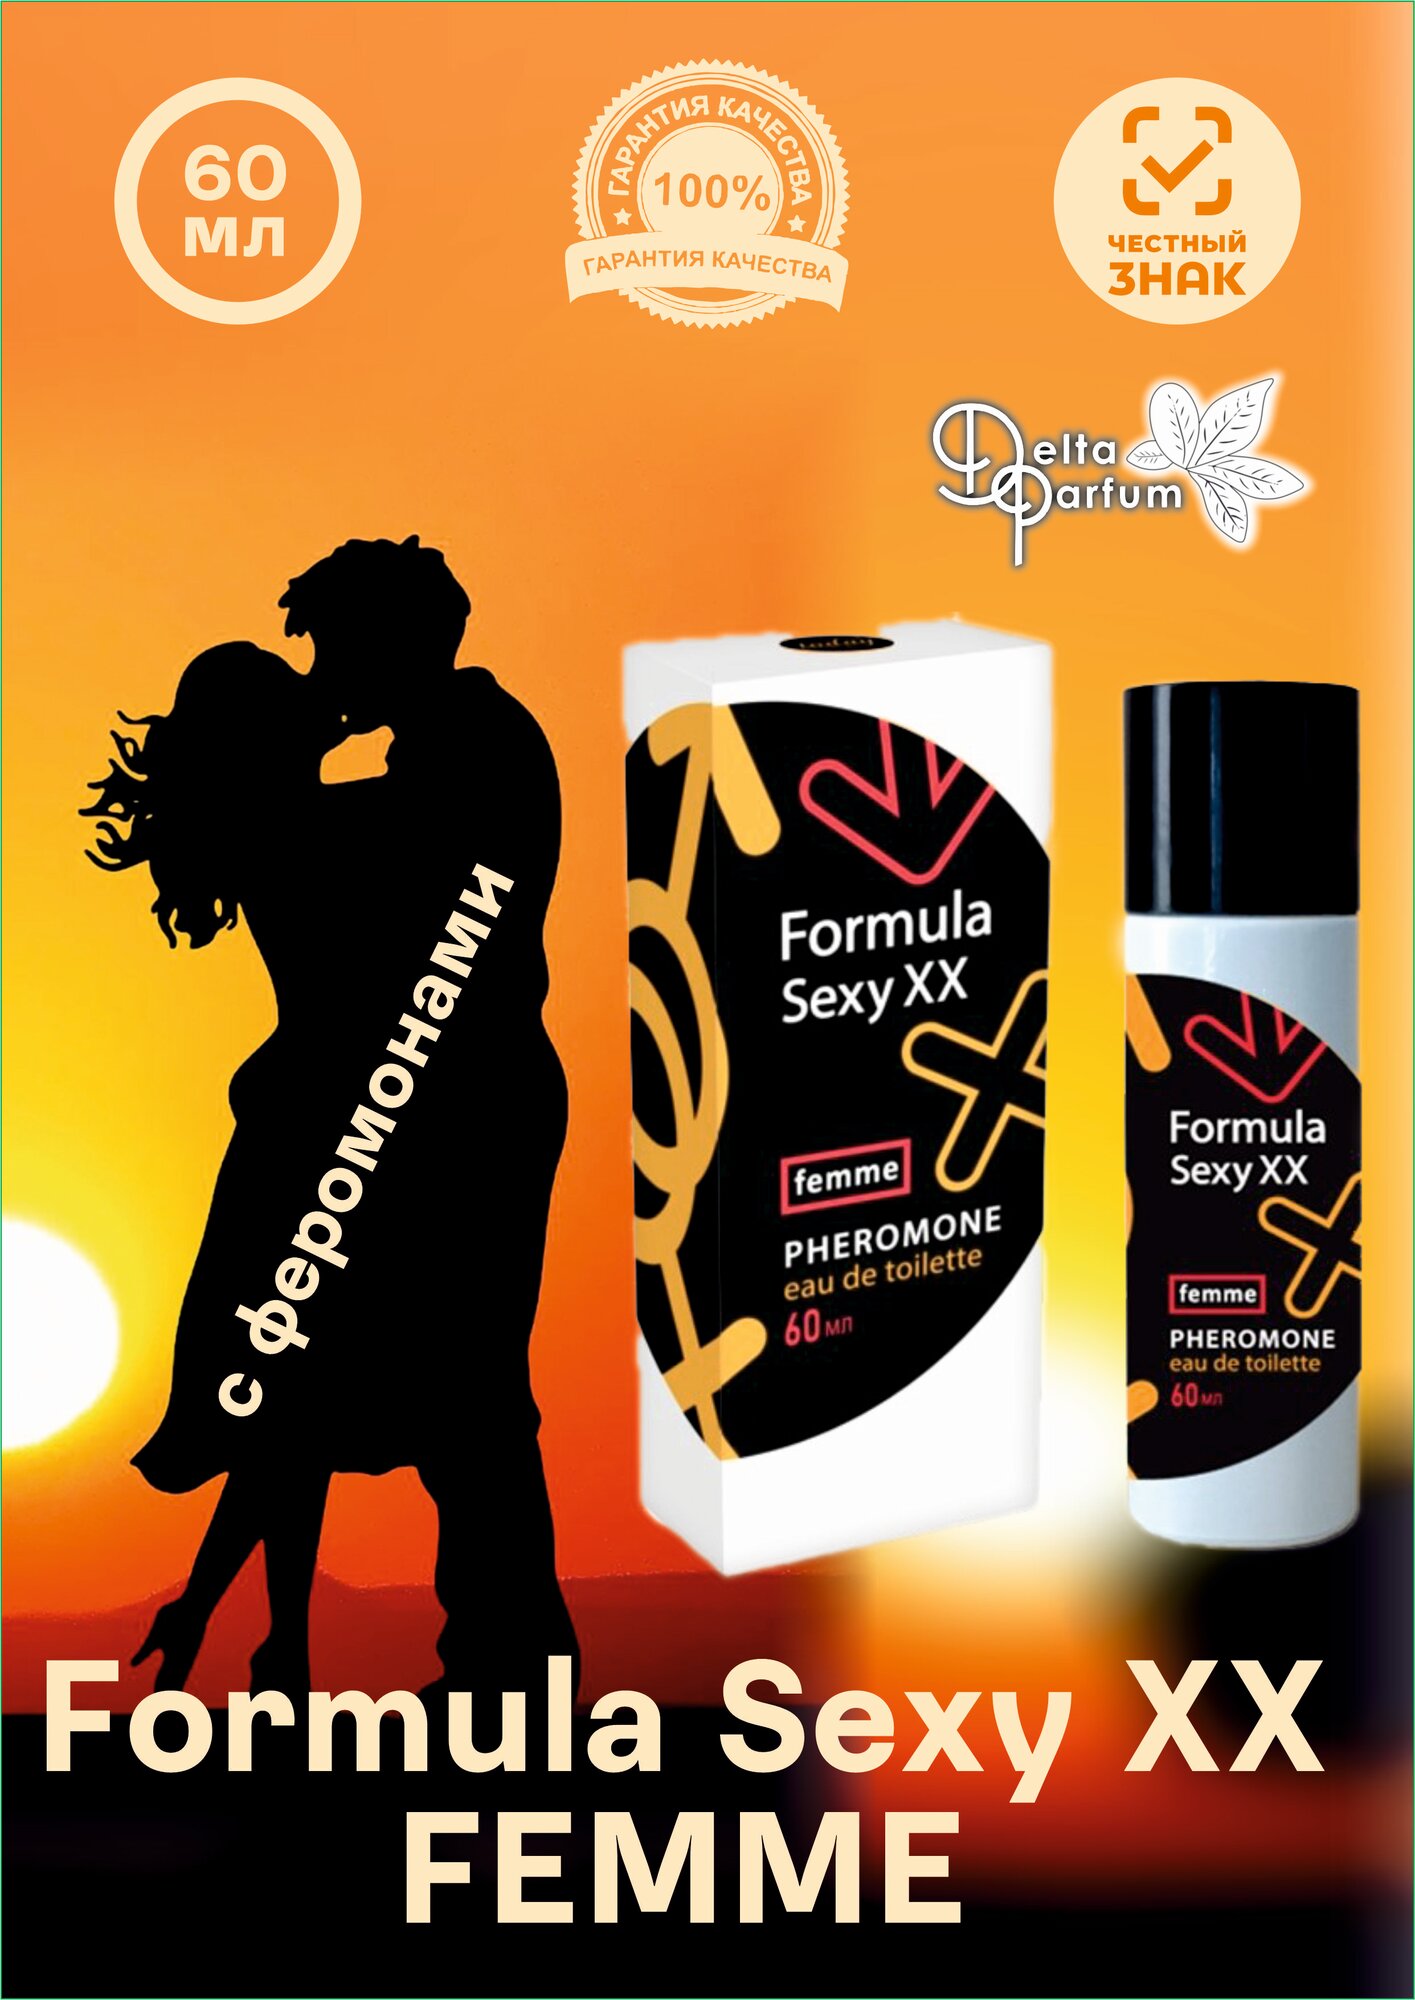 TODAY PARFUM (Delta parfum) Туалетная вода женская FORMULA SEXY XX FEMME